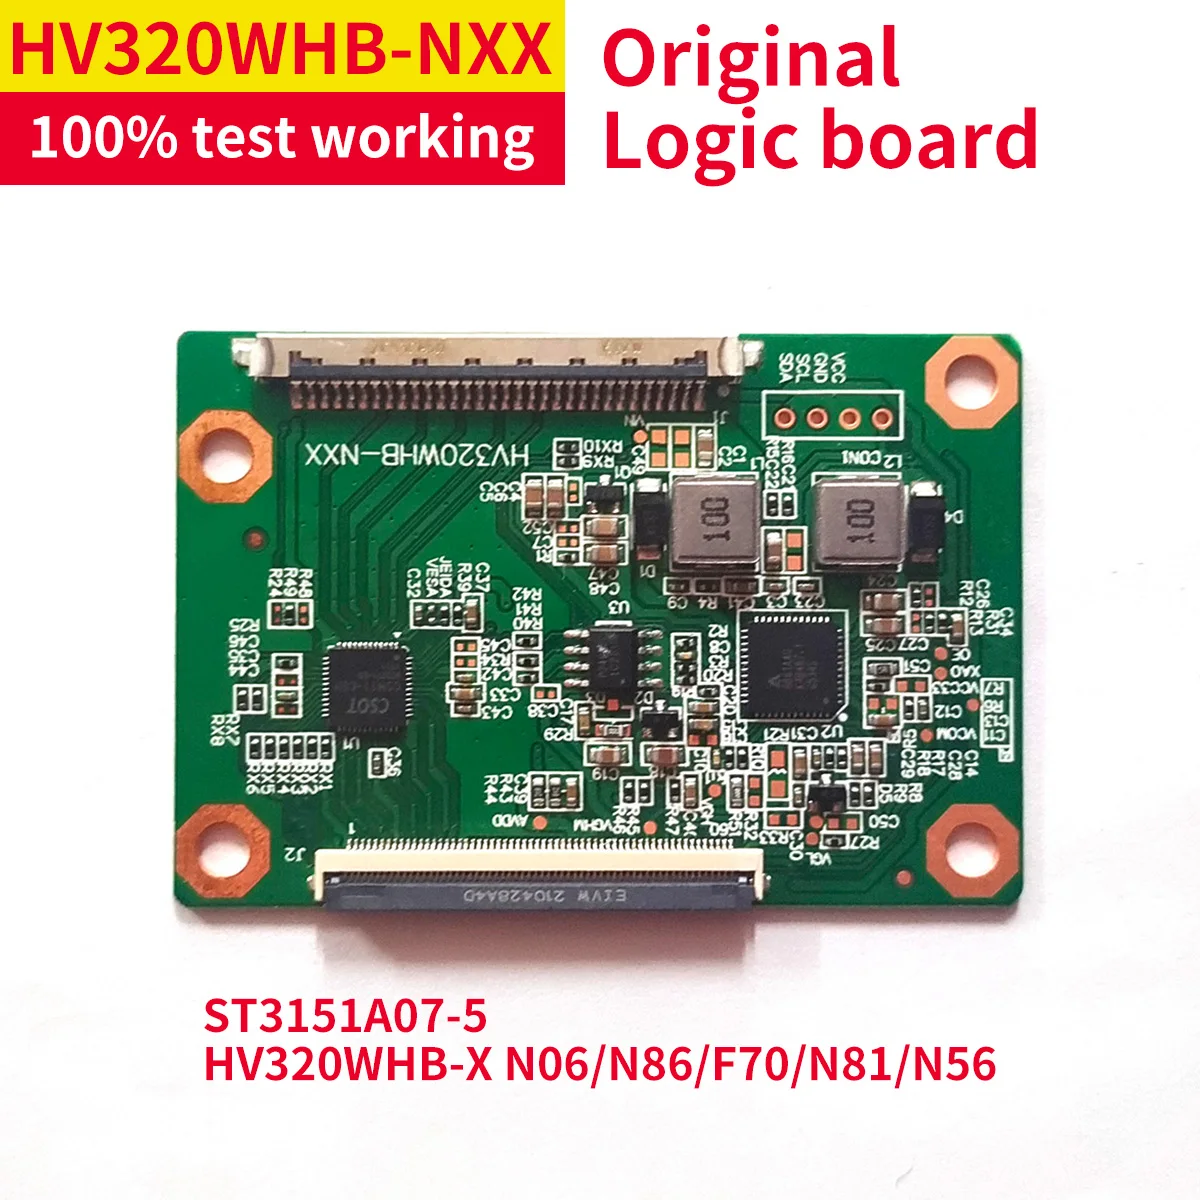 Silman-HV320WHB-X N06/N86/F70/N81/N56, placa lógica Tcon para reparación de pantalla de TV LCD, trabajo de prueba Original, HV320WHB-NXX